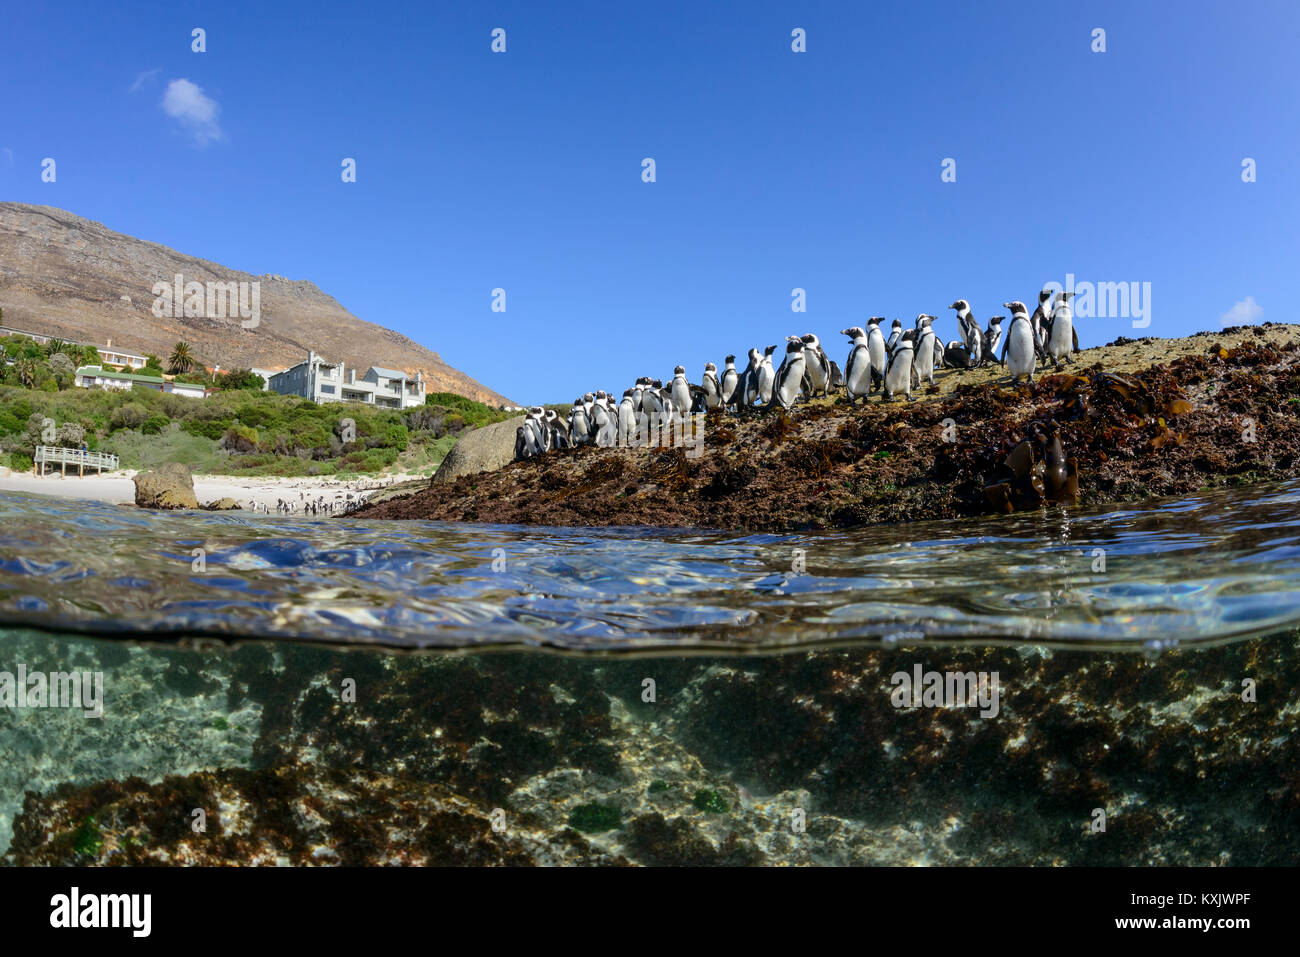 La colonia dei pinguini africani,Spheniscus demersus, Boulders Beach o massi Bay, Simons Town, Sud Africa, Oceano Indiano Foto Stock